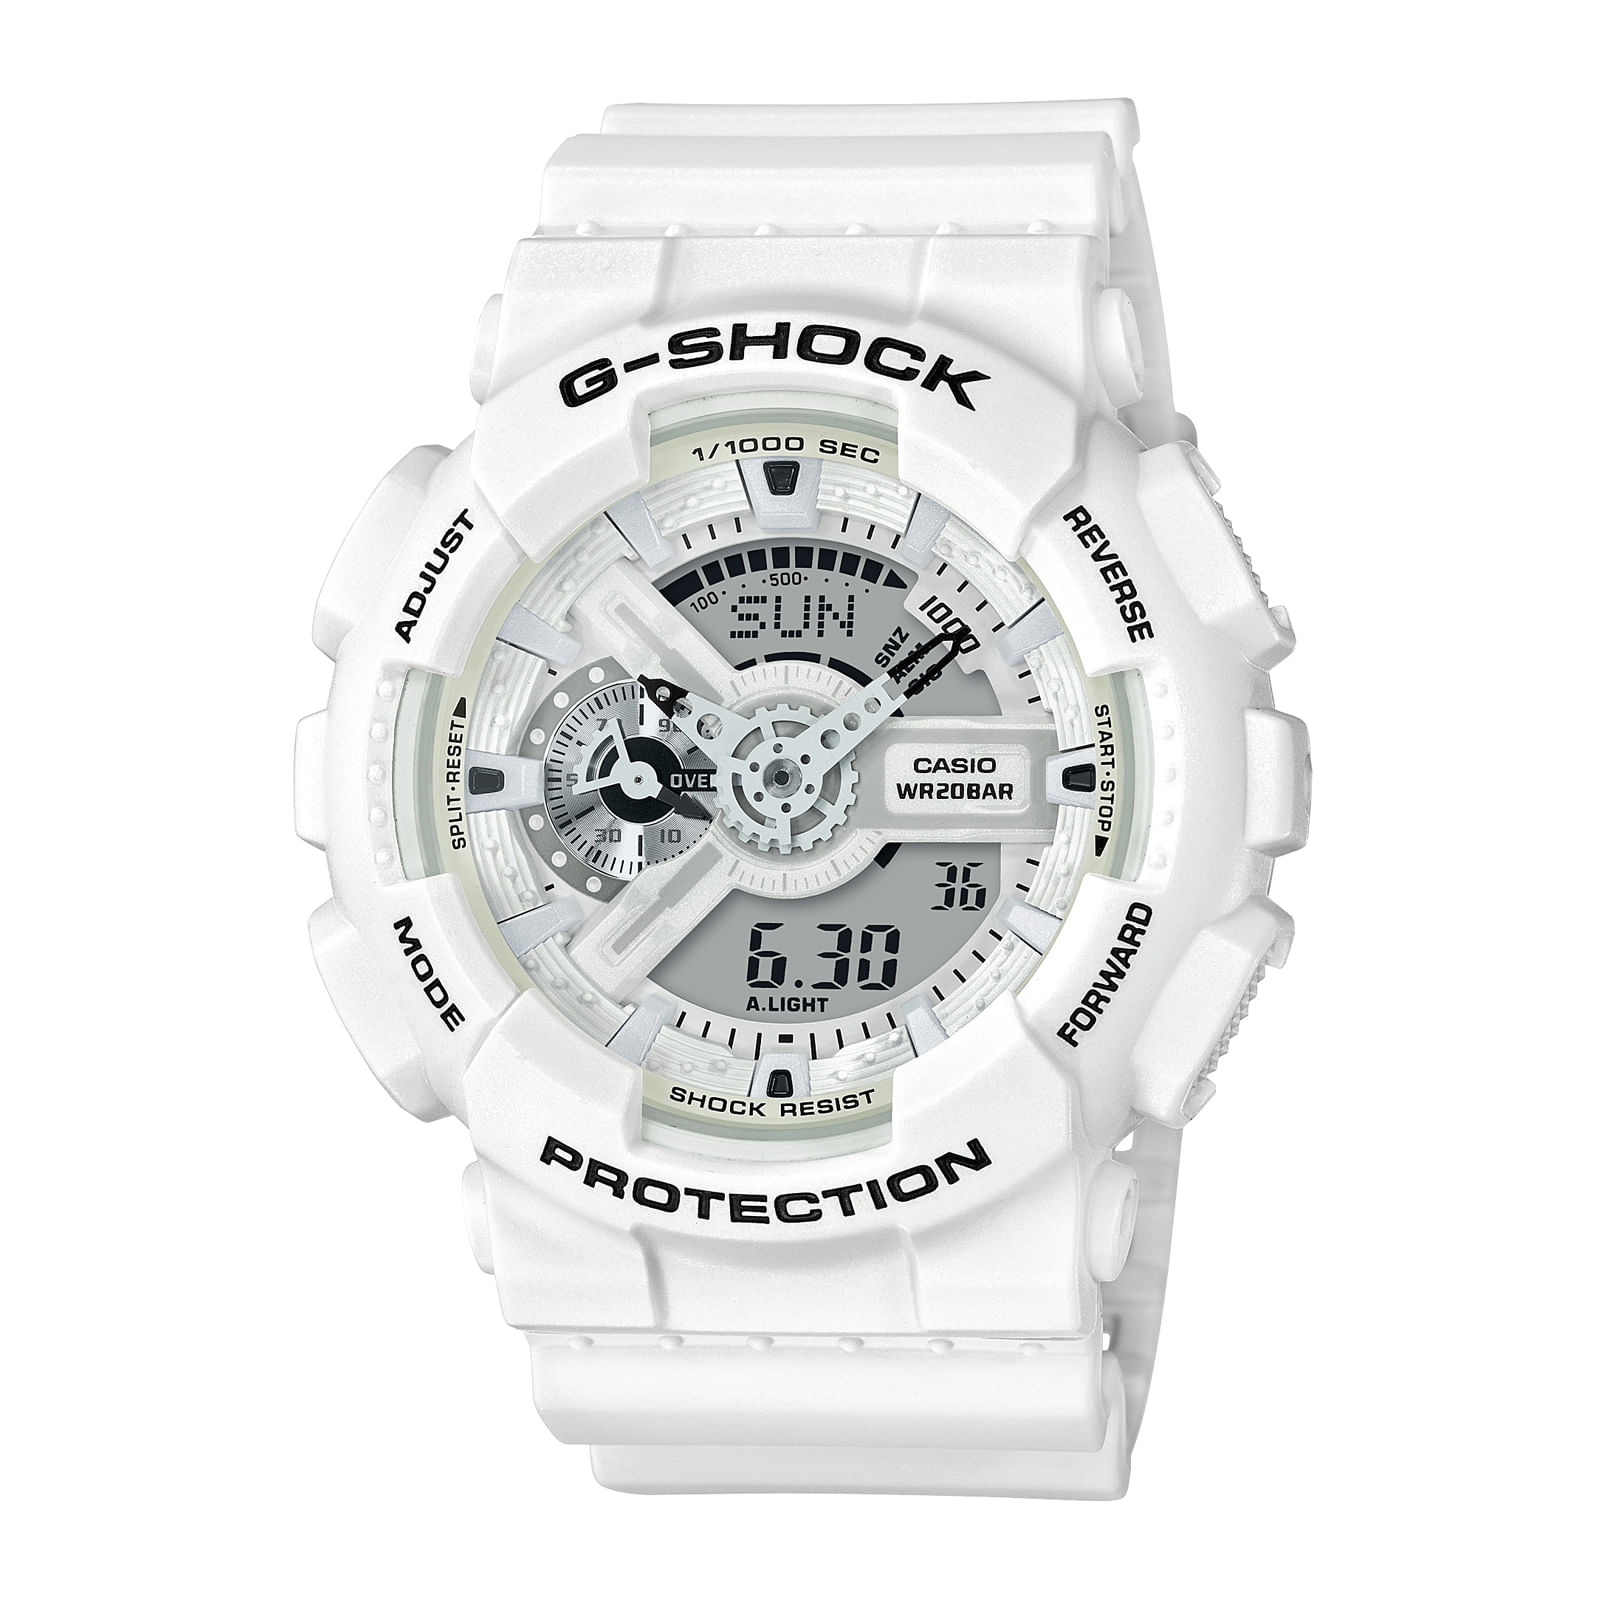 Reloj G-SHOCK GA-110MW-7A Resina Hombre Blanco - Btime